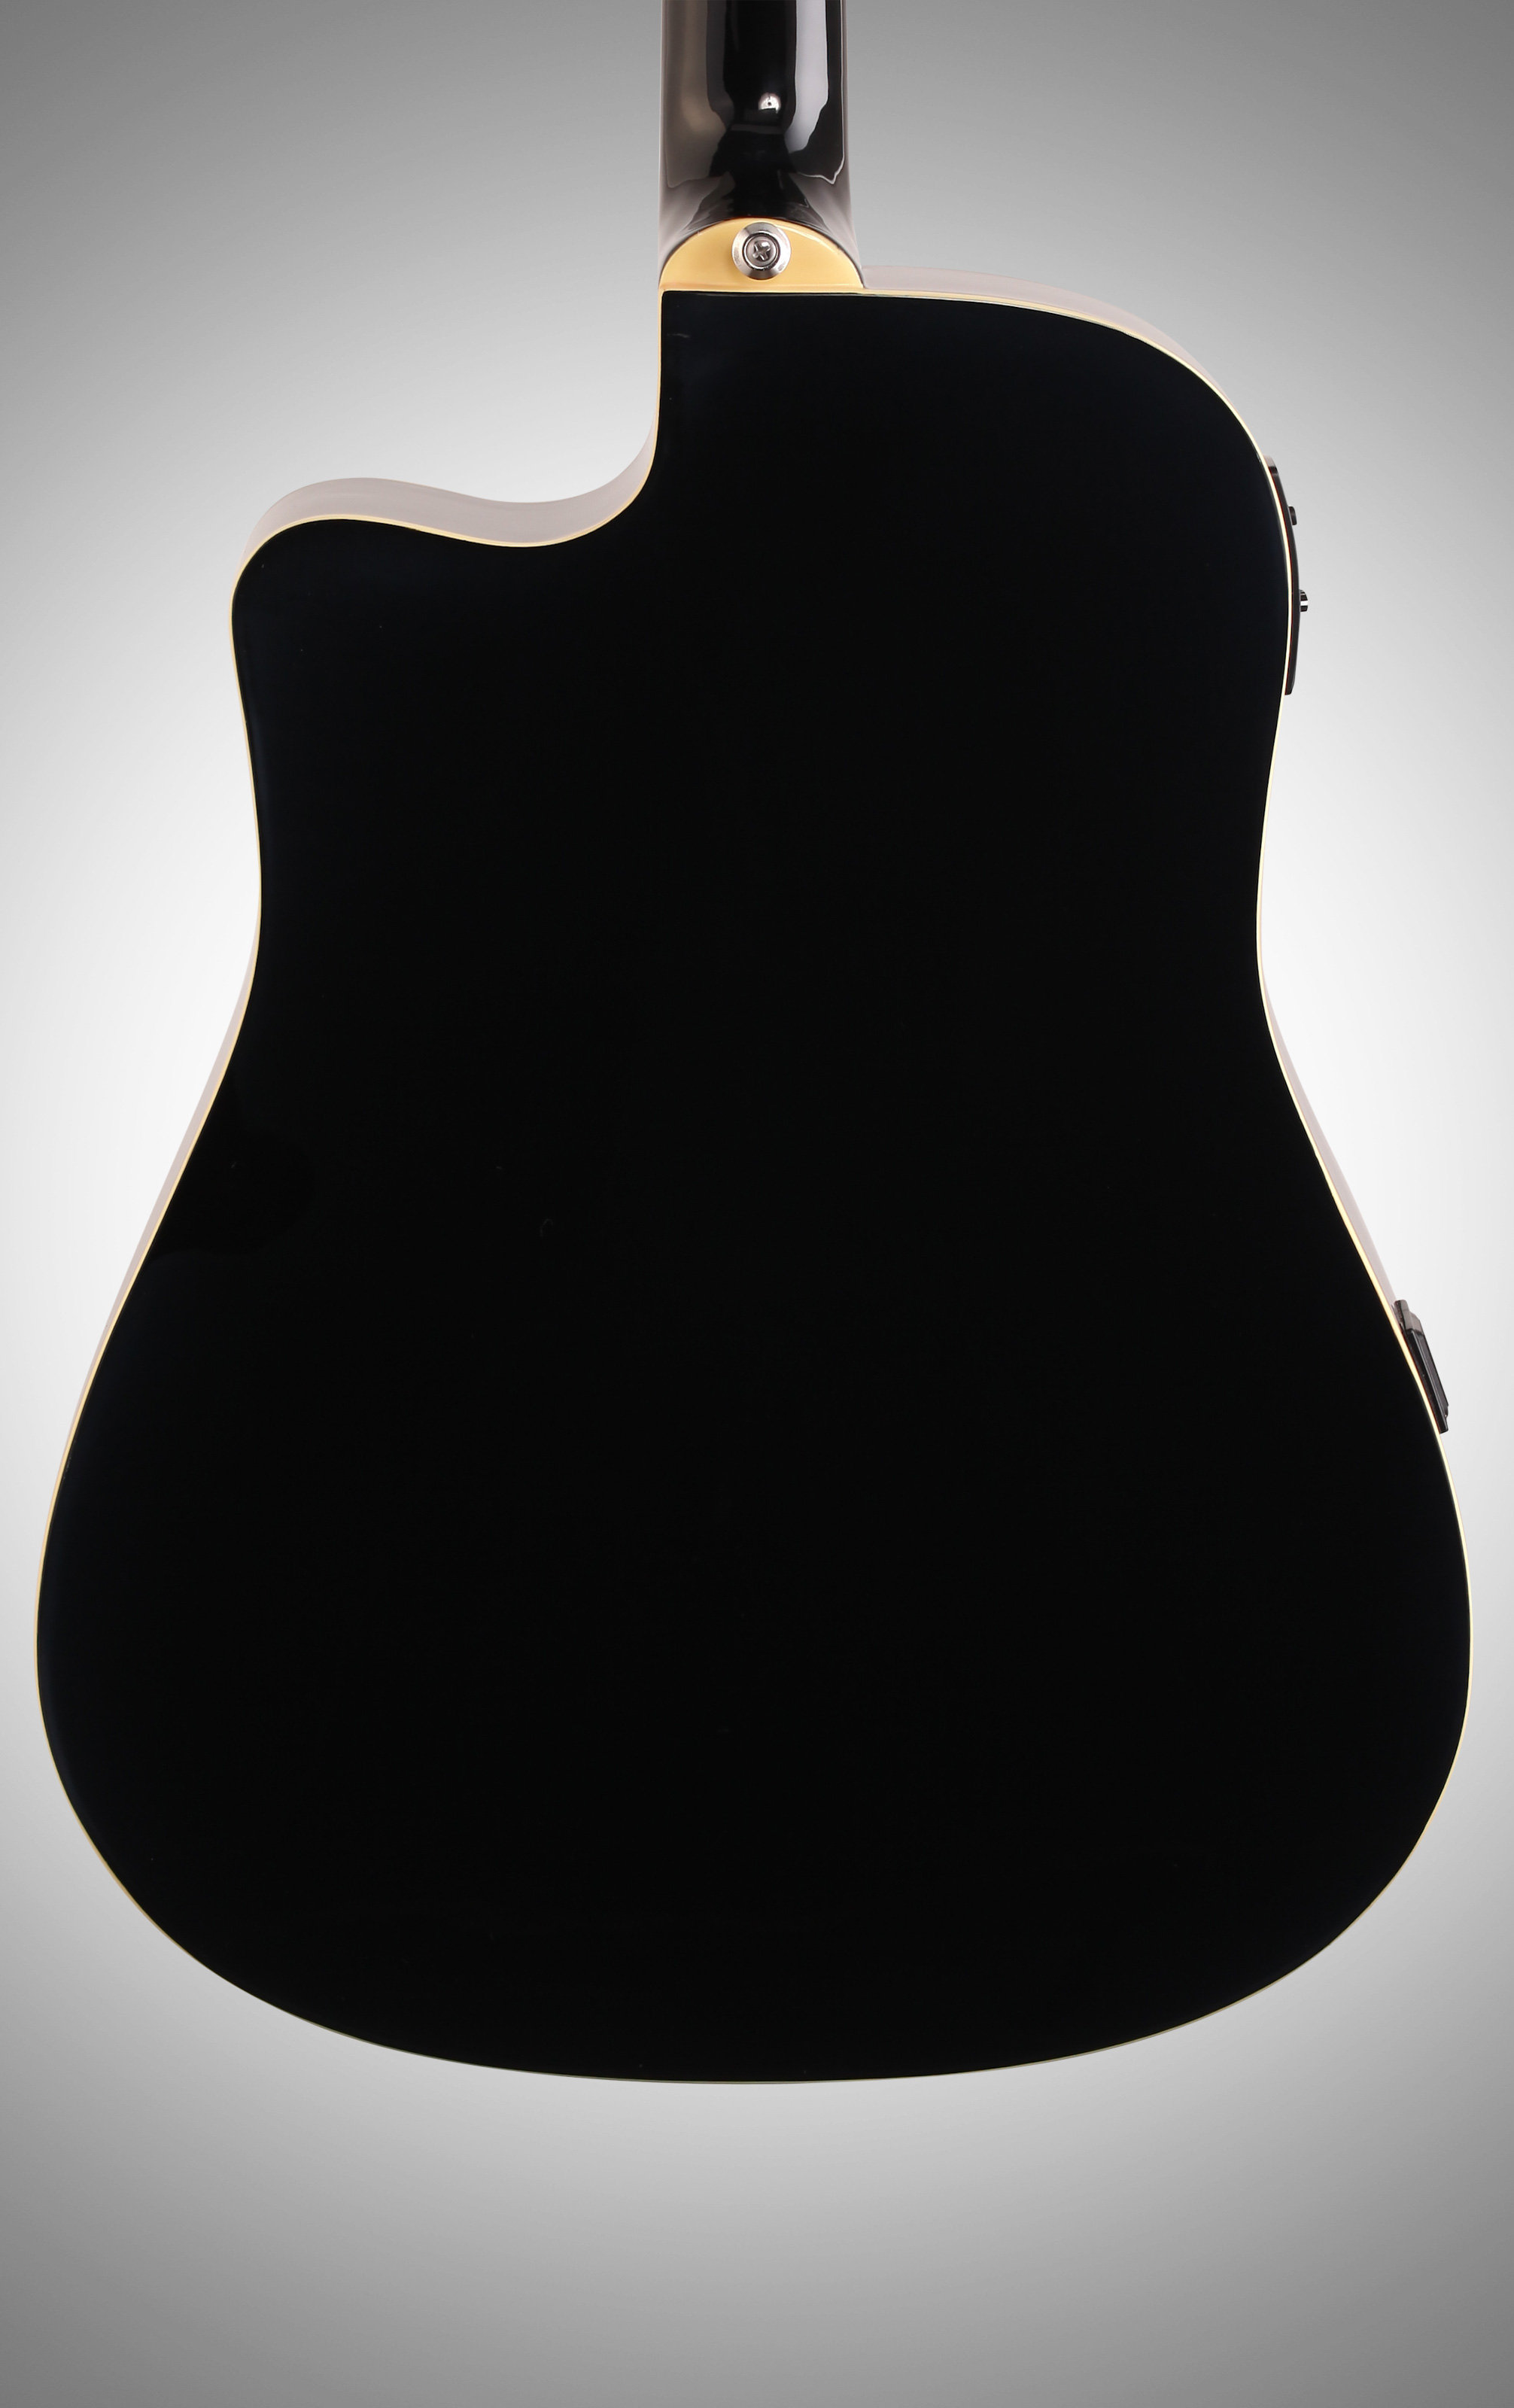 Ibanez PF15ECE Dreadnought Acoustic-Electric Guitar, Black, Body 